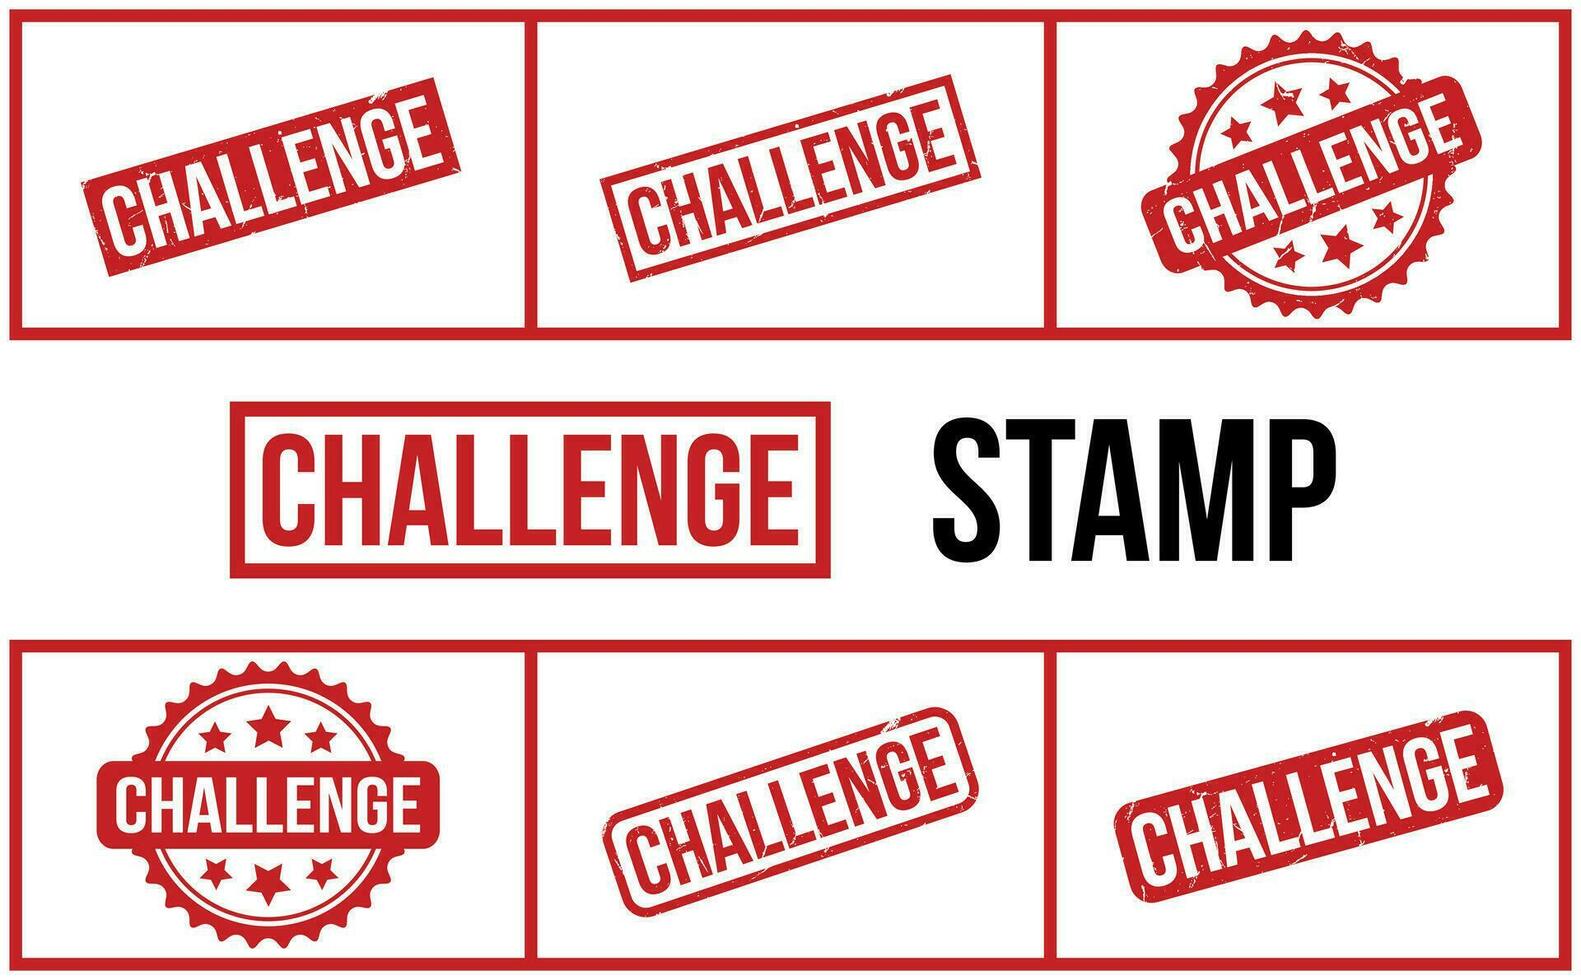 Challenge Rubber Stamp Set Vector